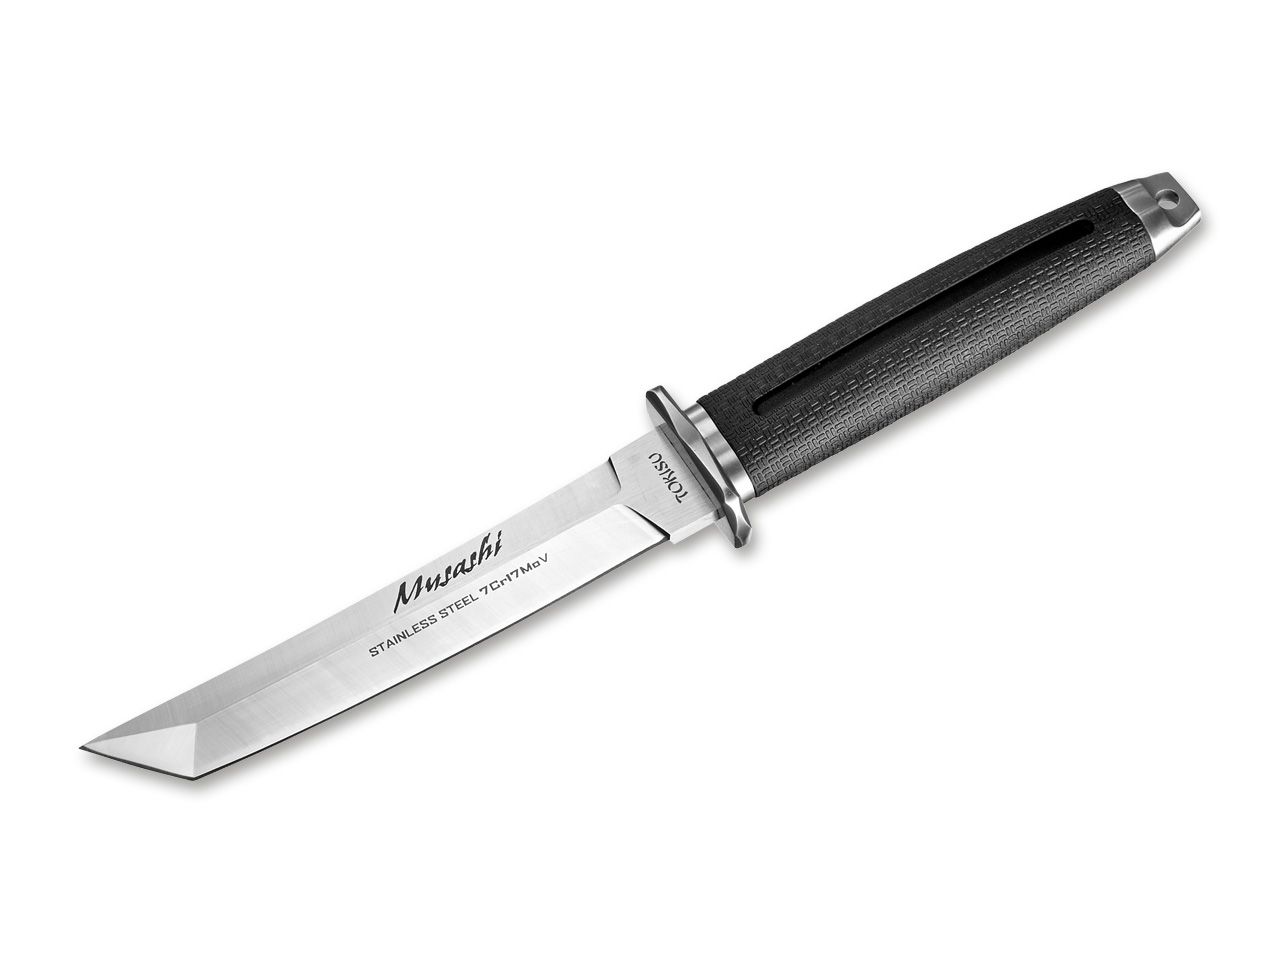 Messer Musashi von Tokisu